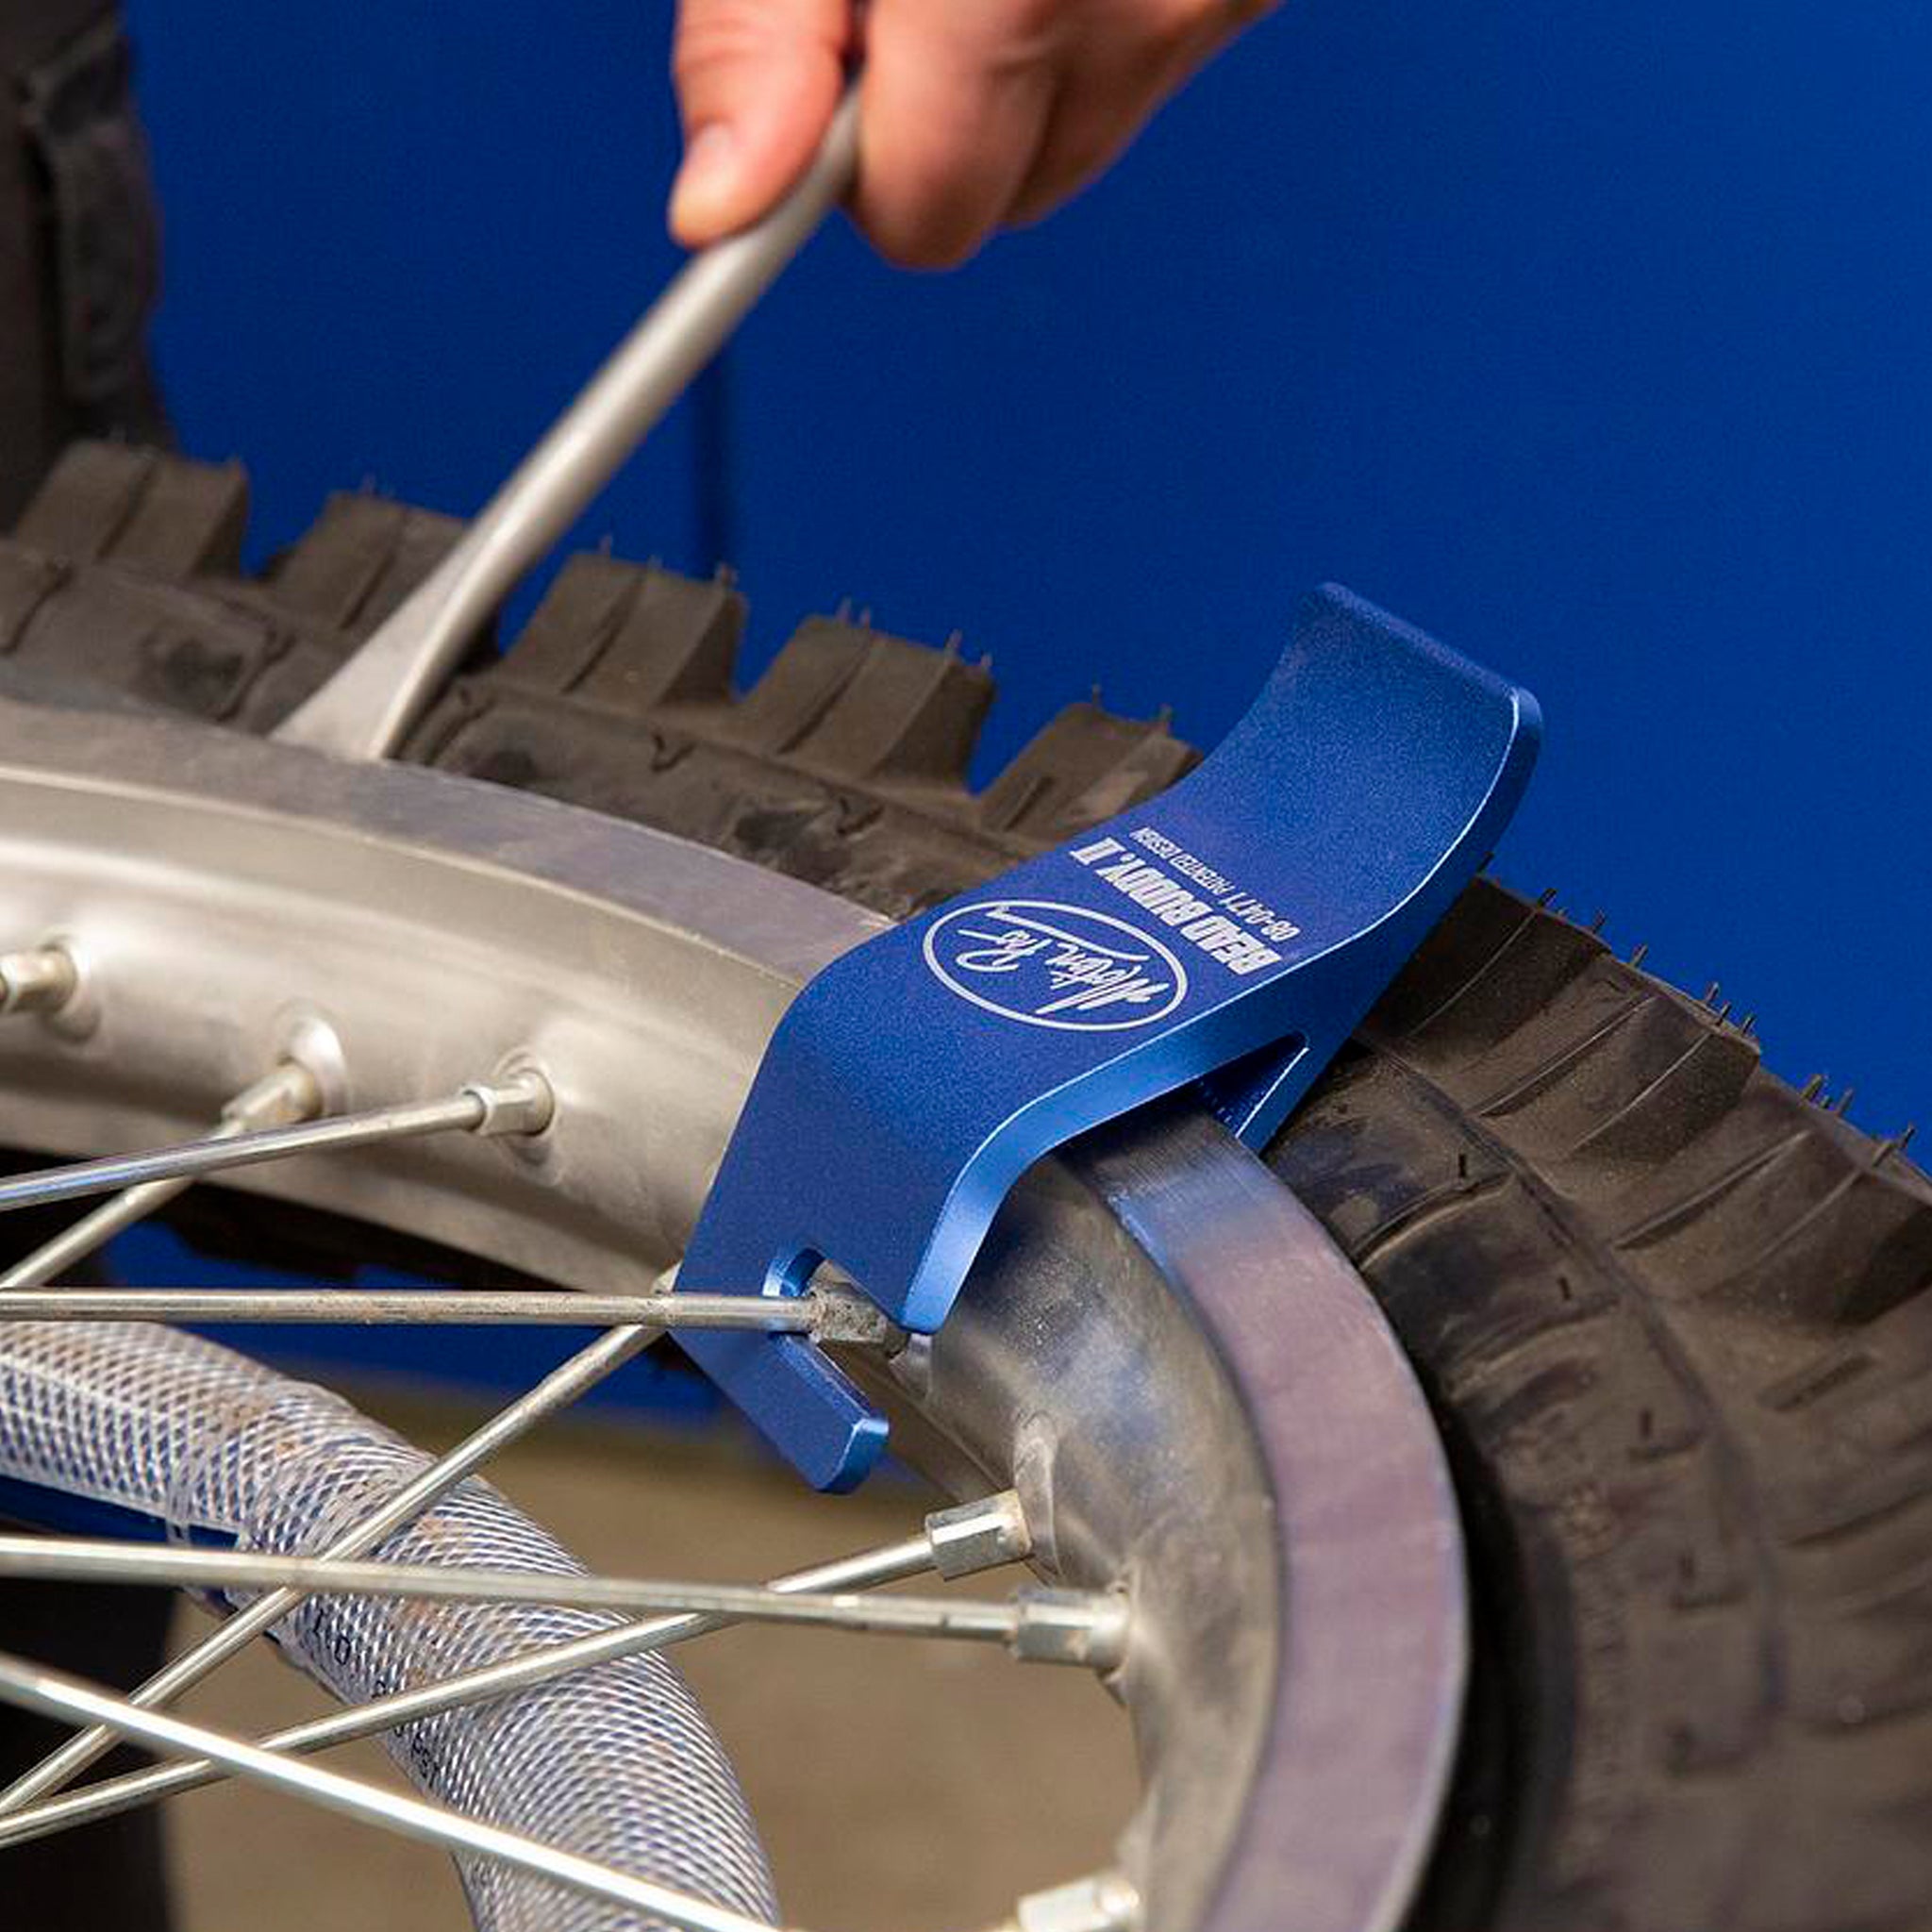 Motion Pro Bead Buddy II Aluminum Tire Tool - Blue